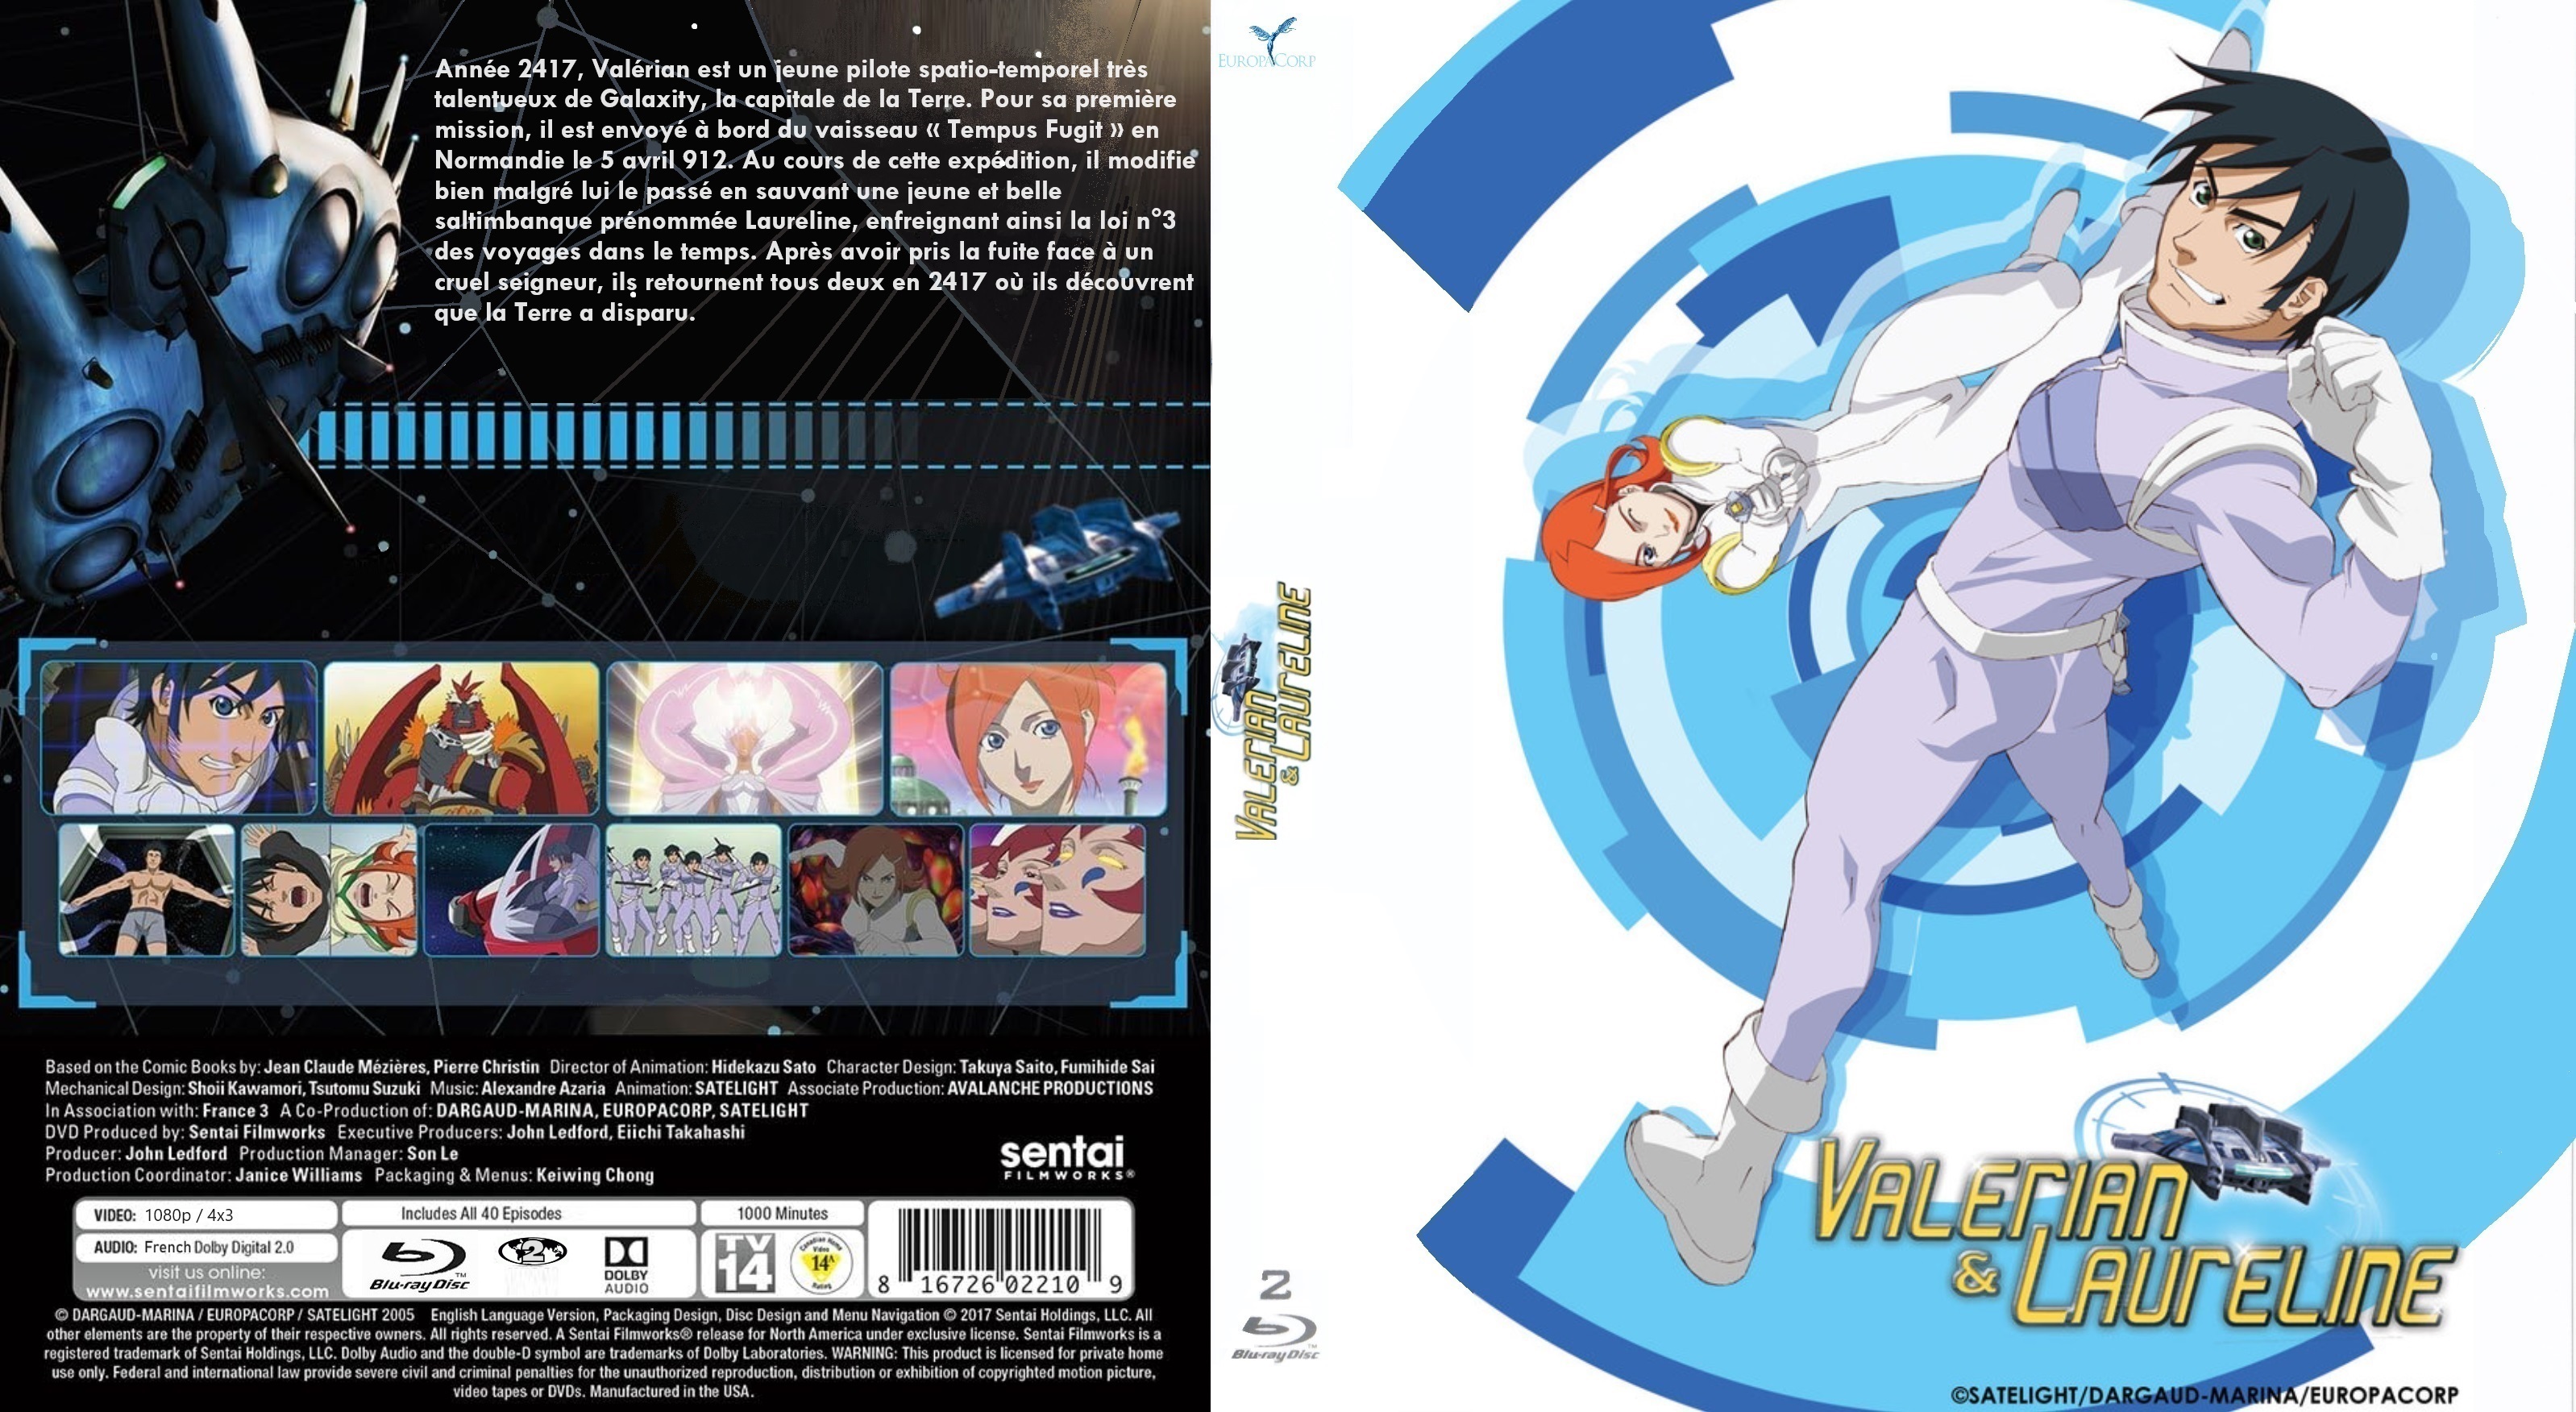 Jaquette DVD Valerian & Laureline la srie anime  custom (BLU-RAY)